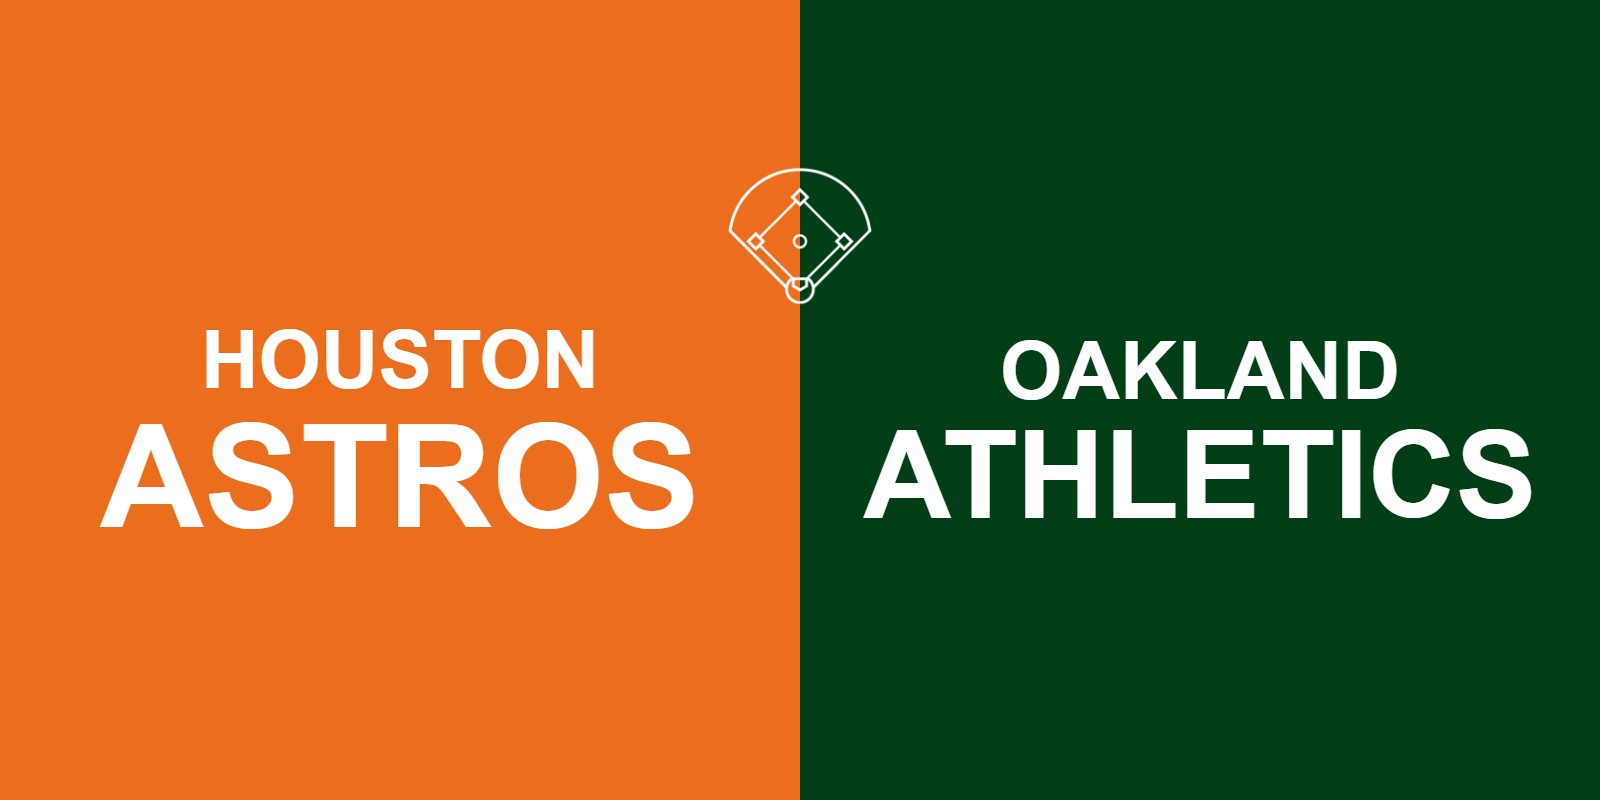 Astros vs Athletics